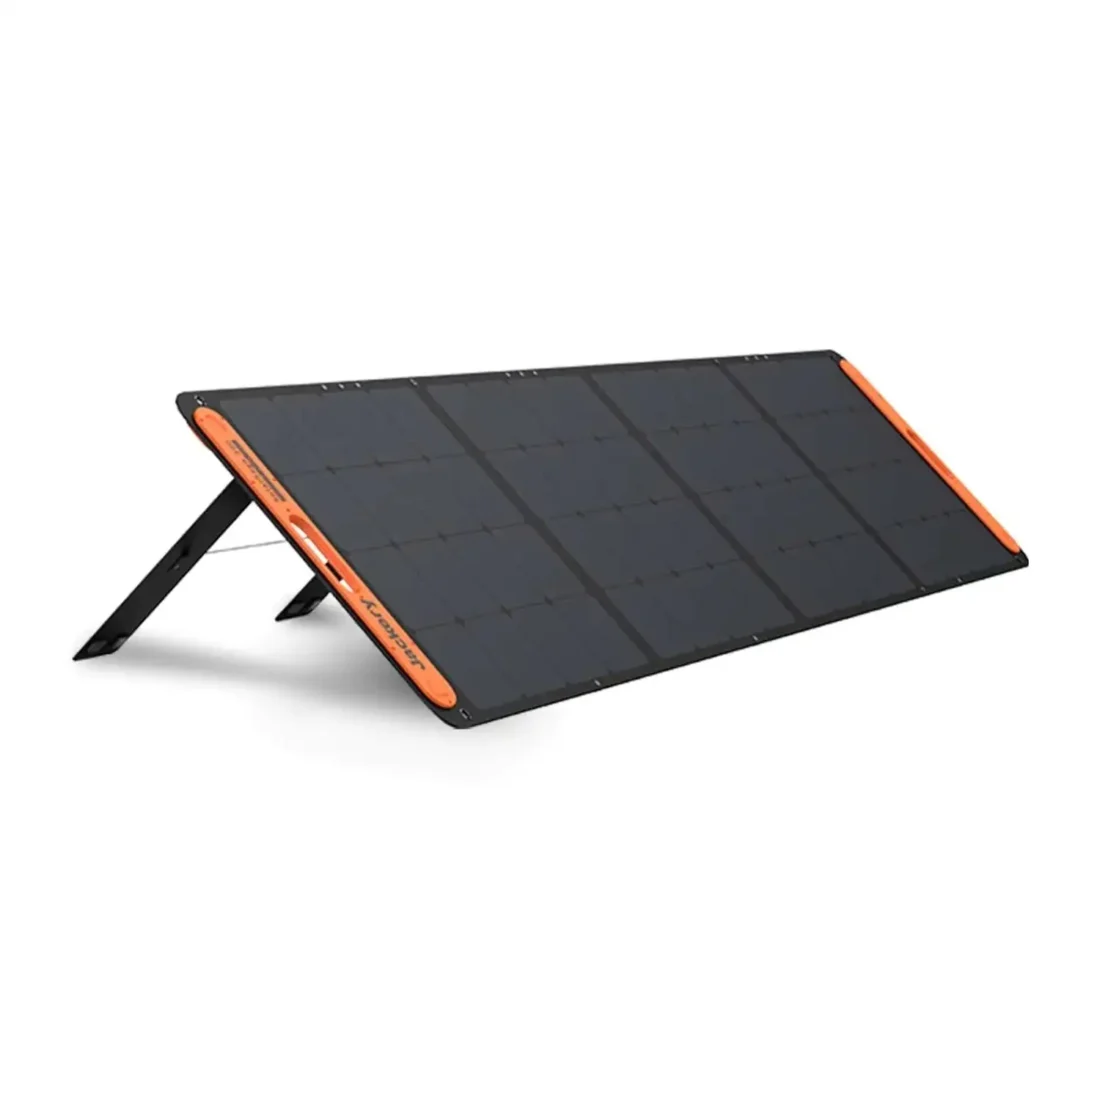 Jackery Explorer 1000 Pro Portable Power Station + 4 SolarSaga 200W Solar Panels